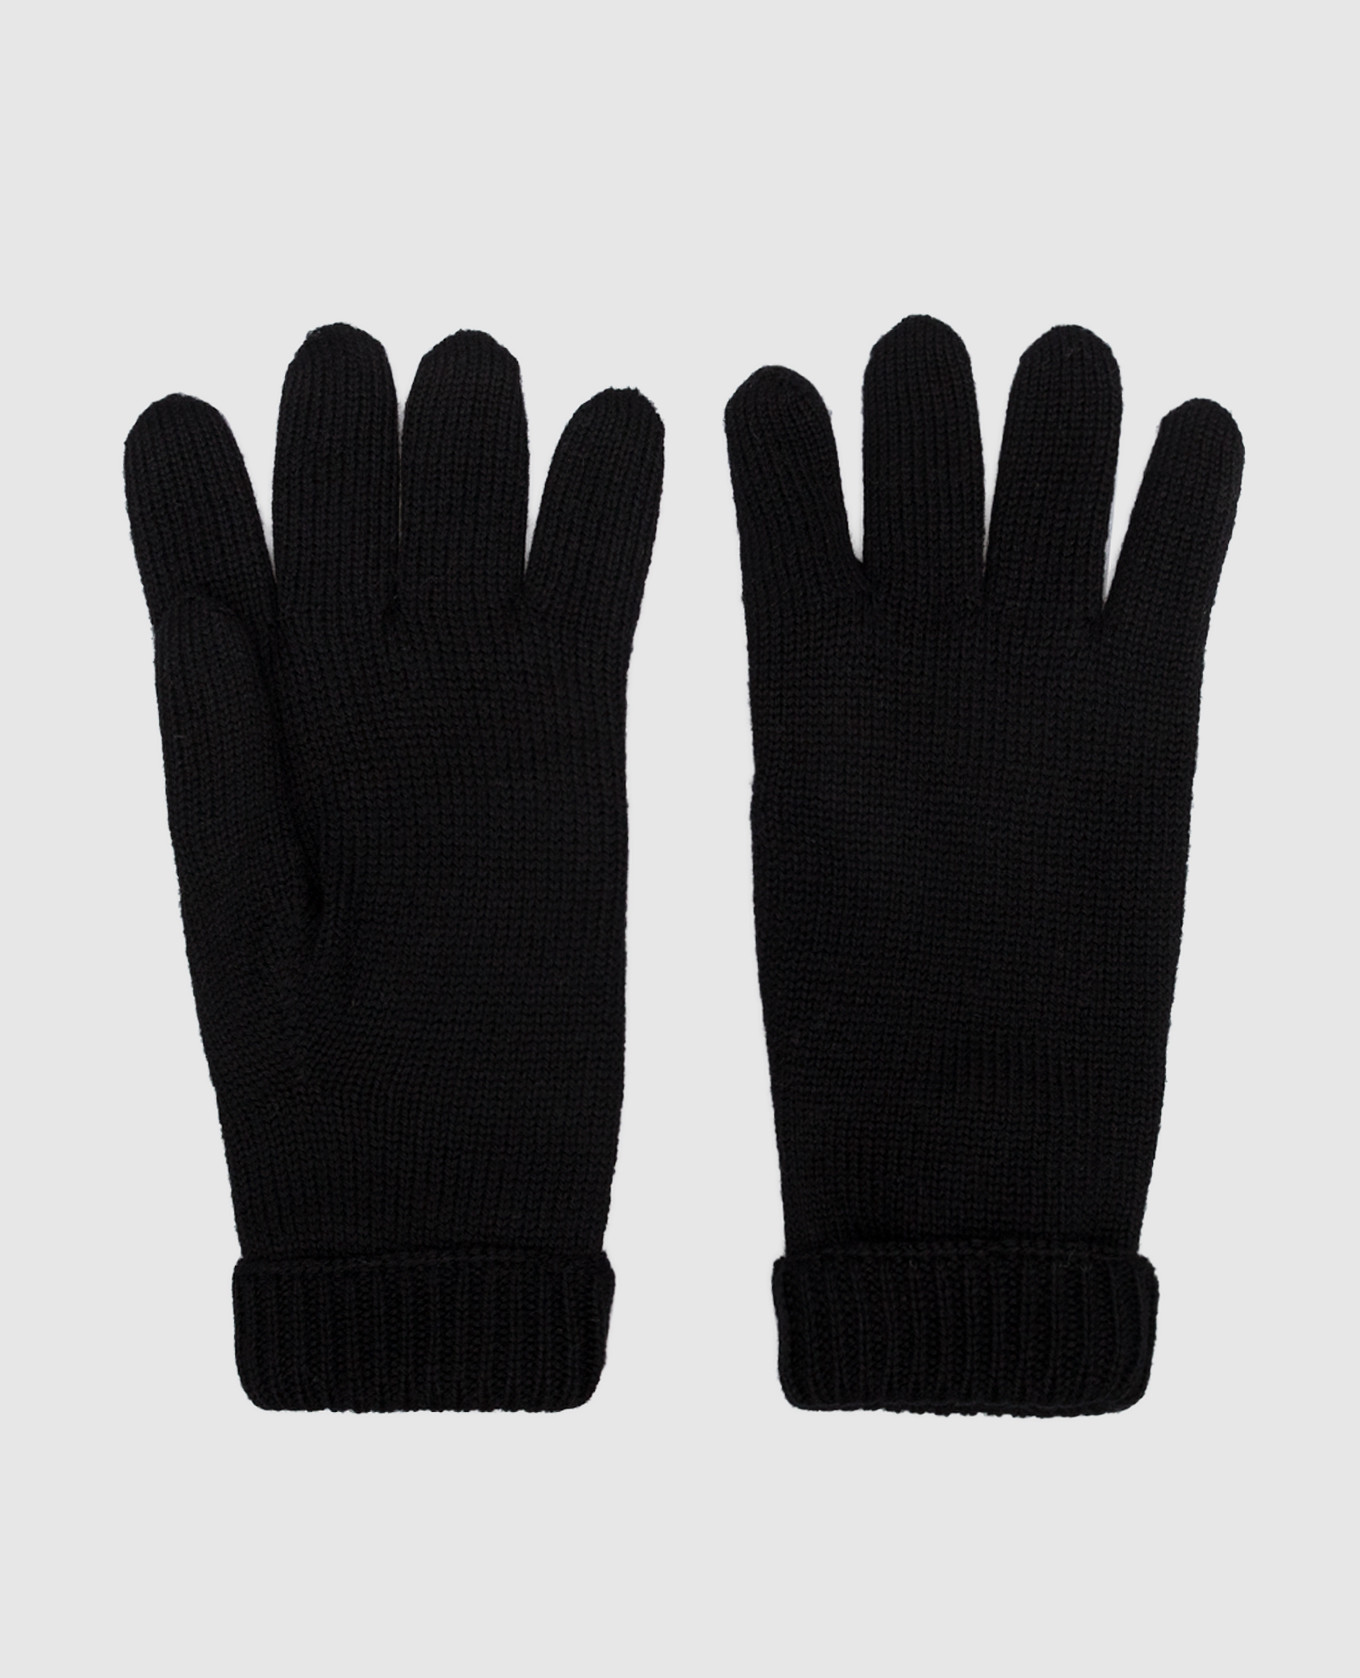 Children's black mittens made of wool